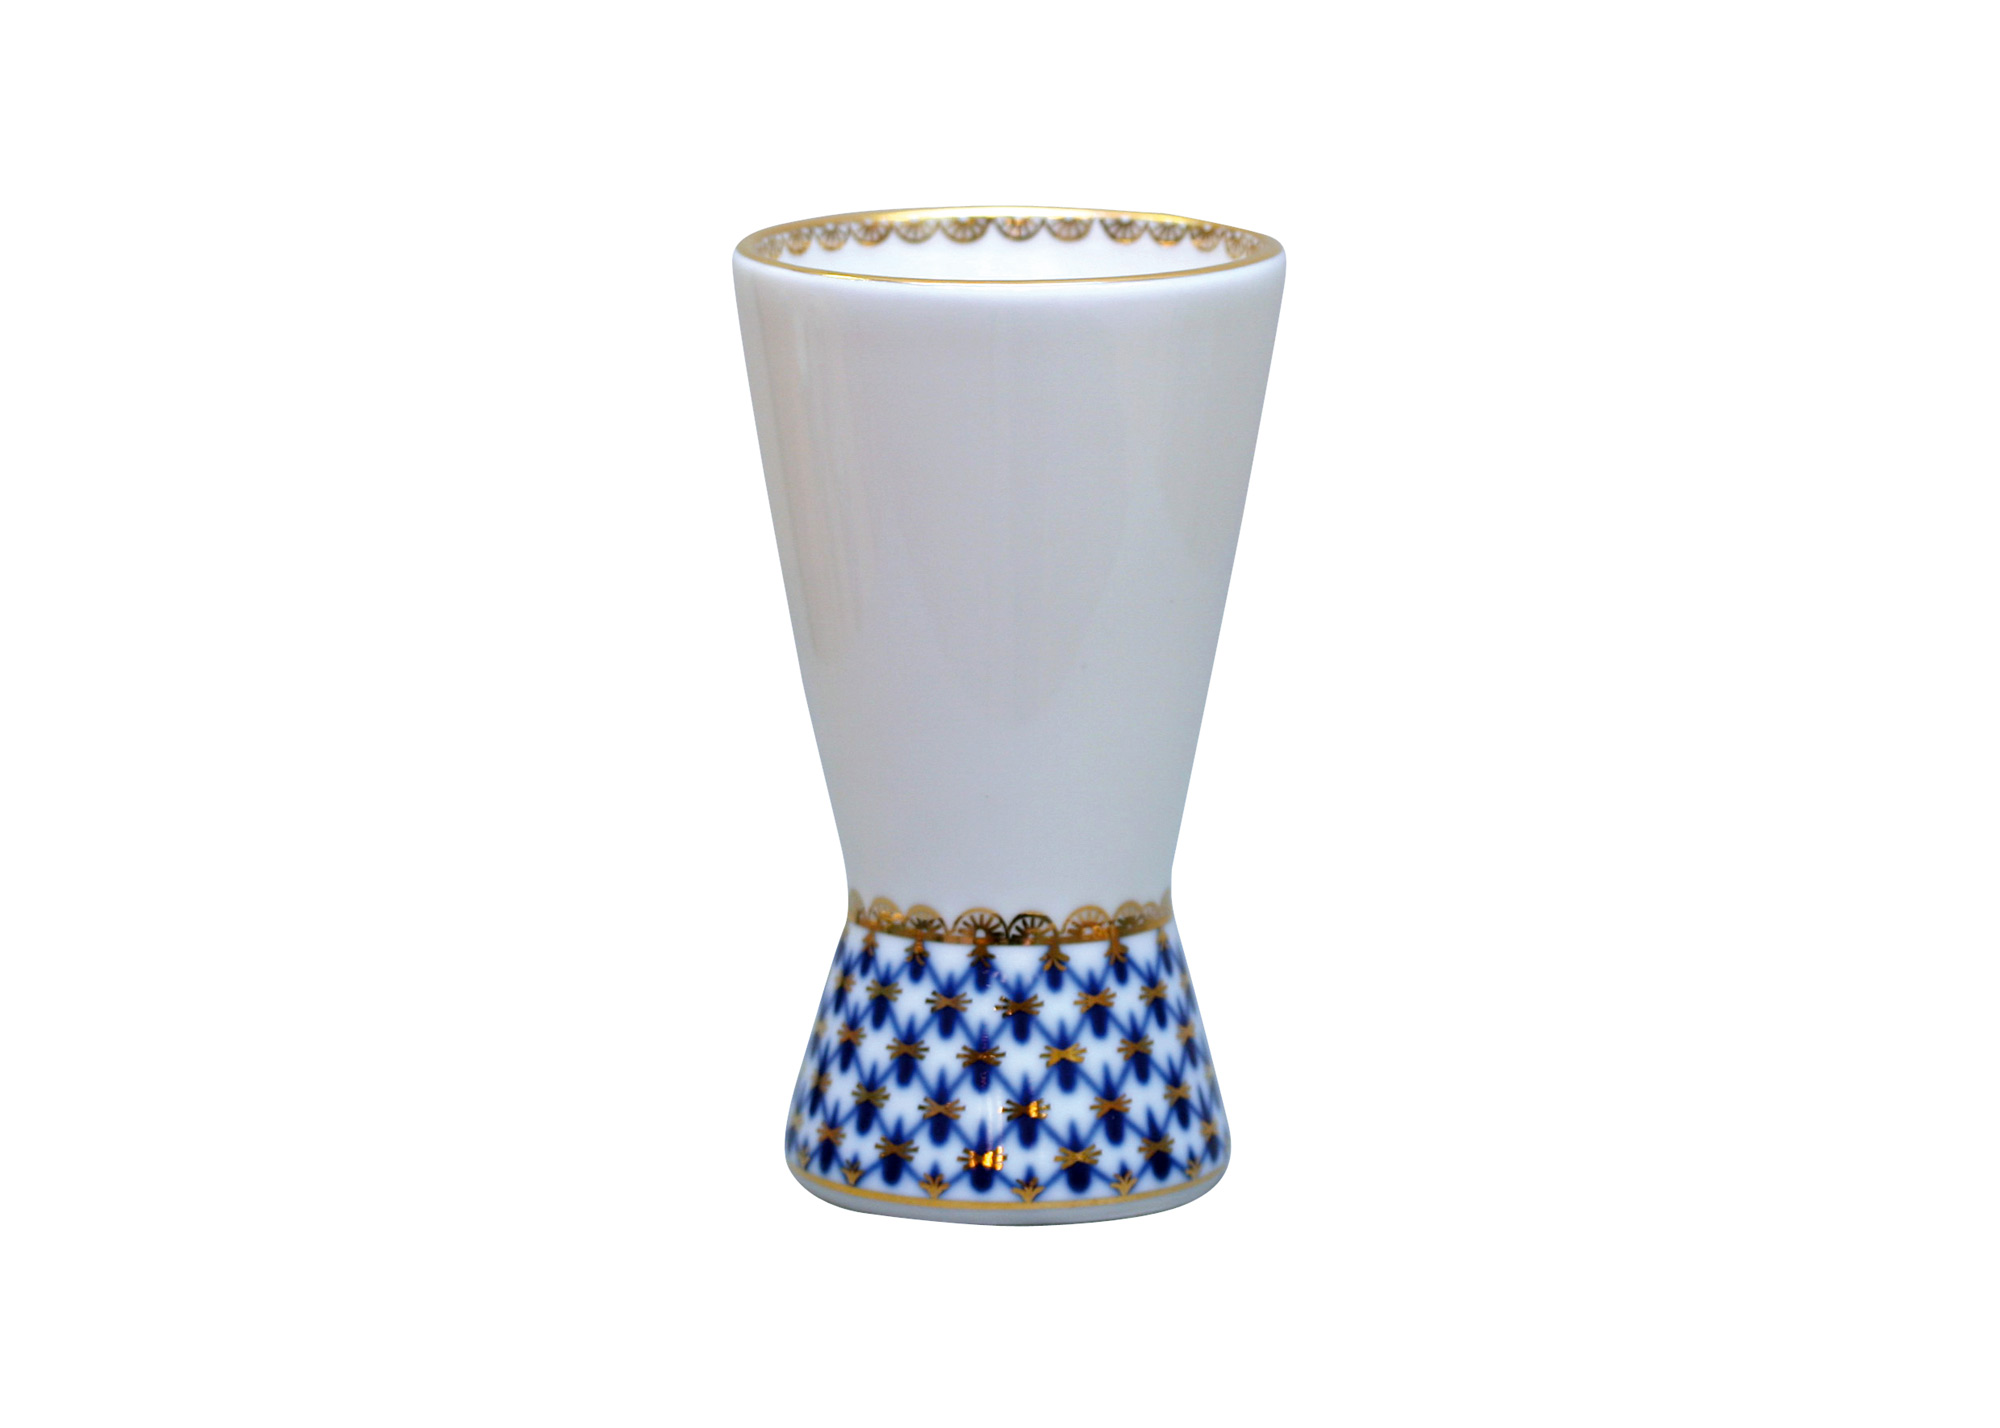 Buy Cobalt Net Vase, Napkin at GoldenCockerel.com